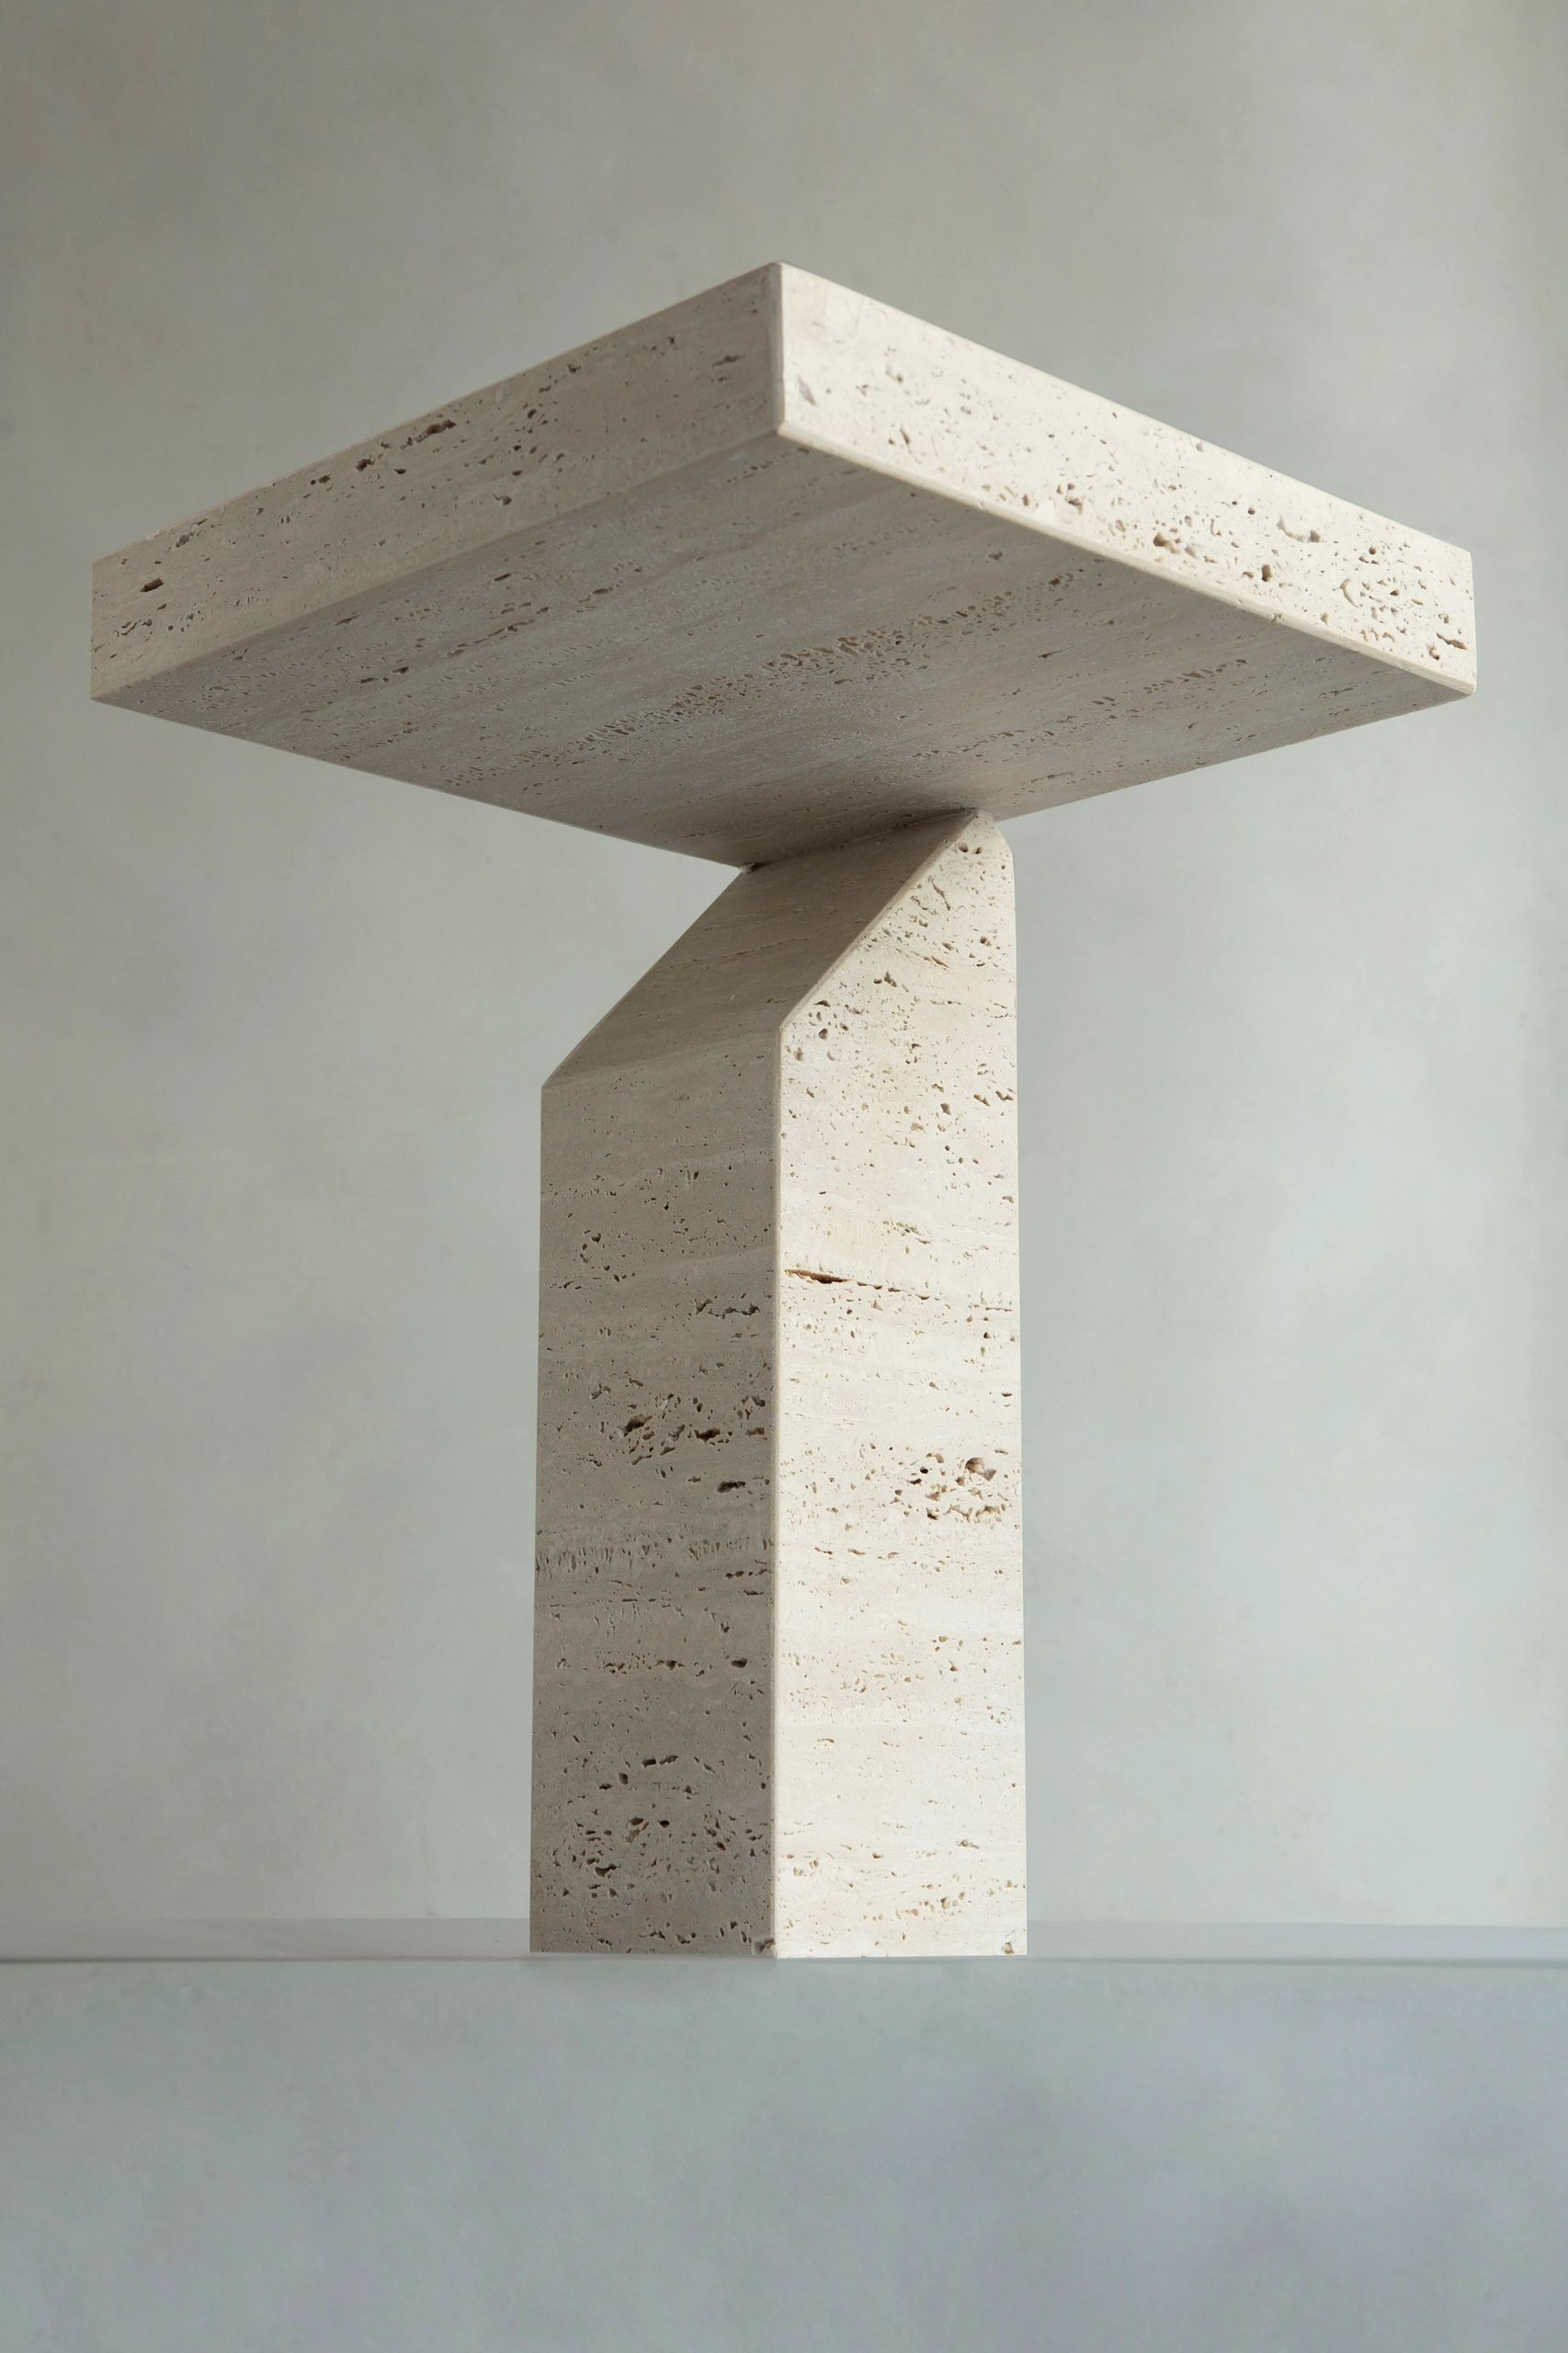 dam atelier travertine stone collectible table